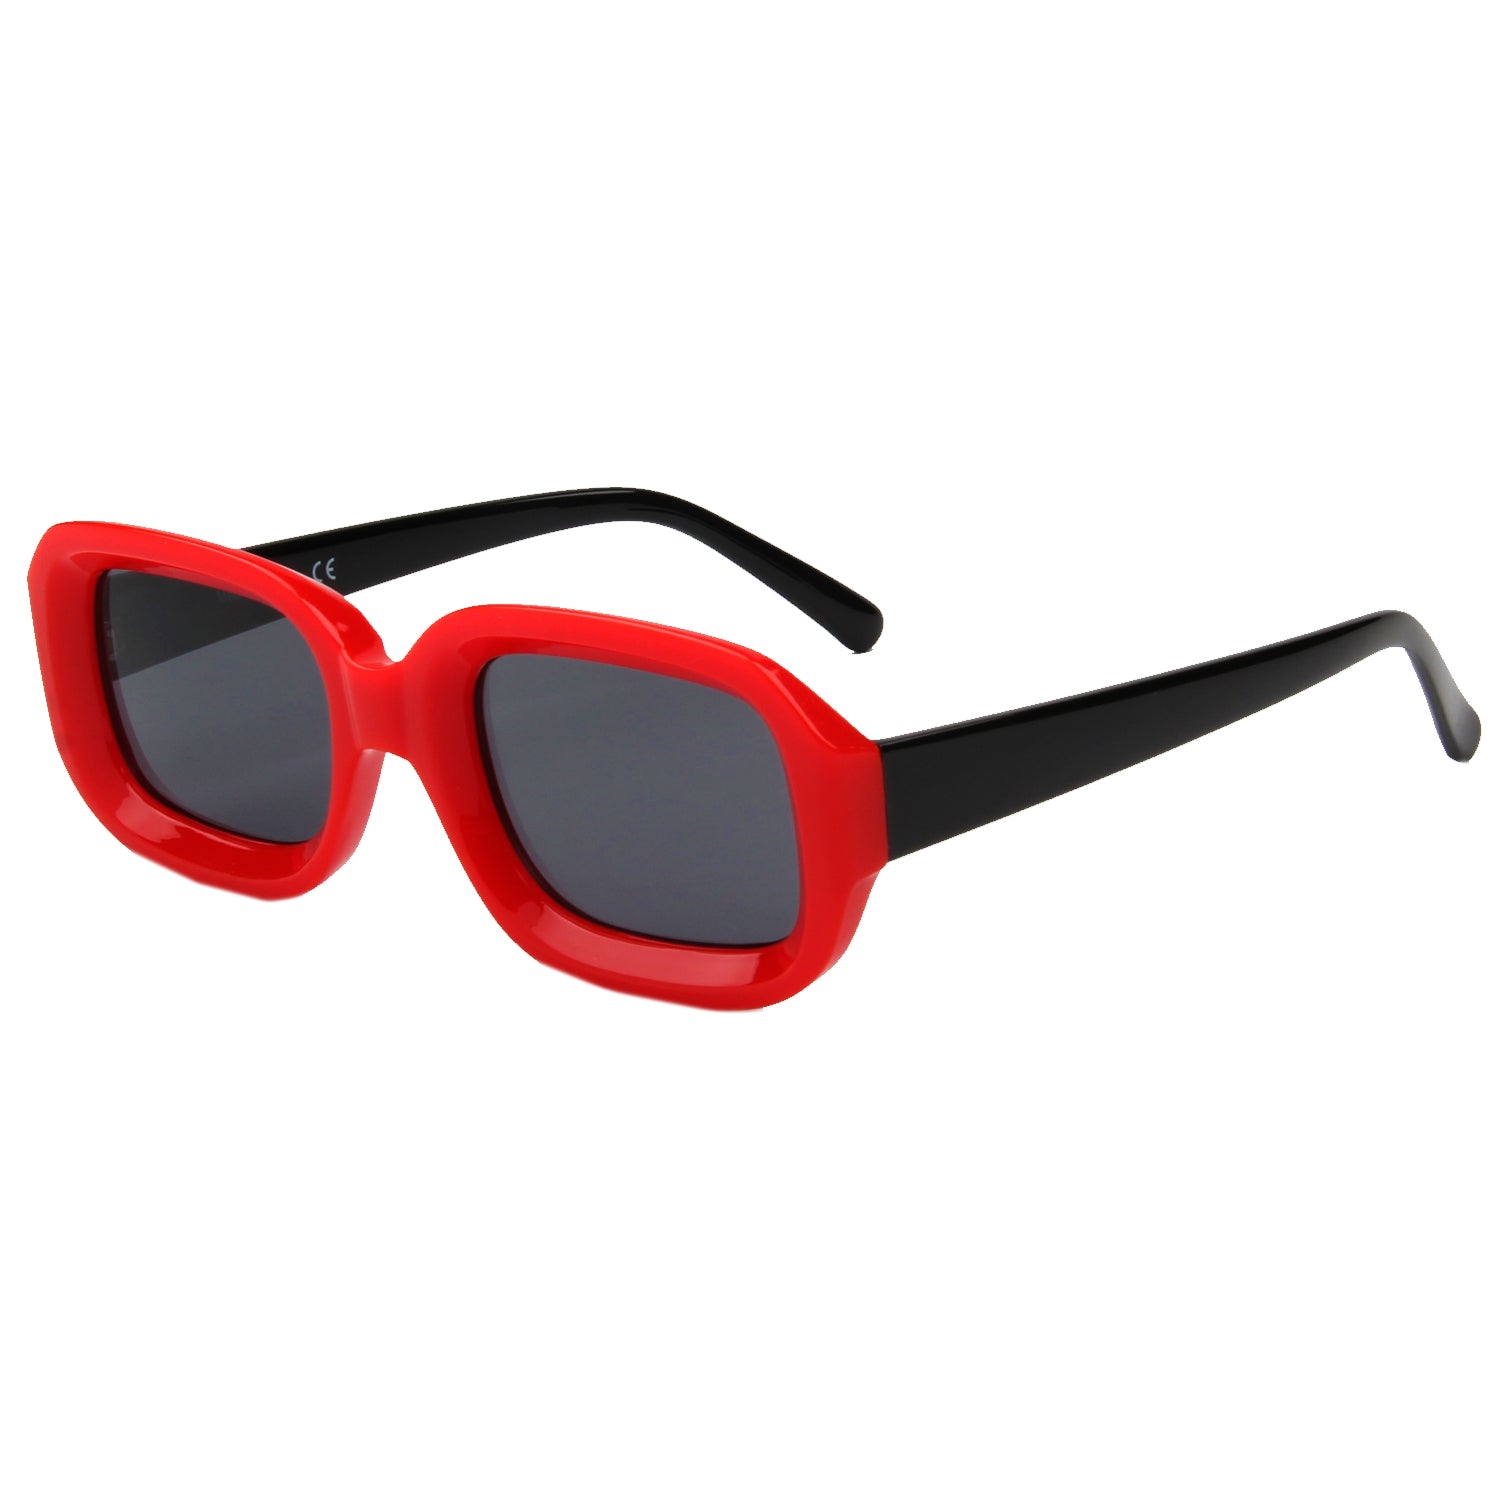 S1050 - Women Retro VINTAGE Square Sunglasses Red